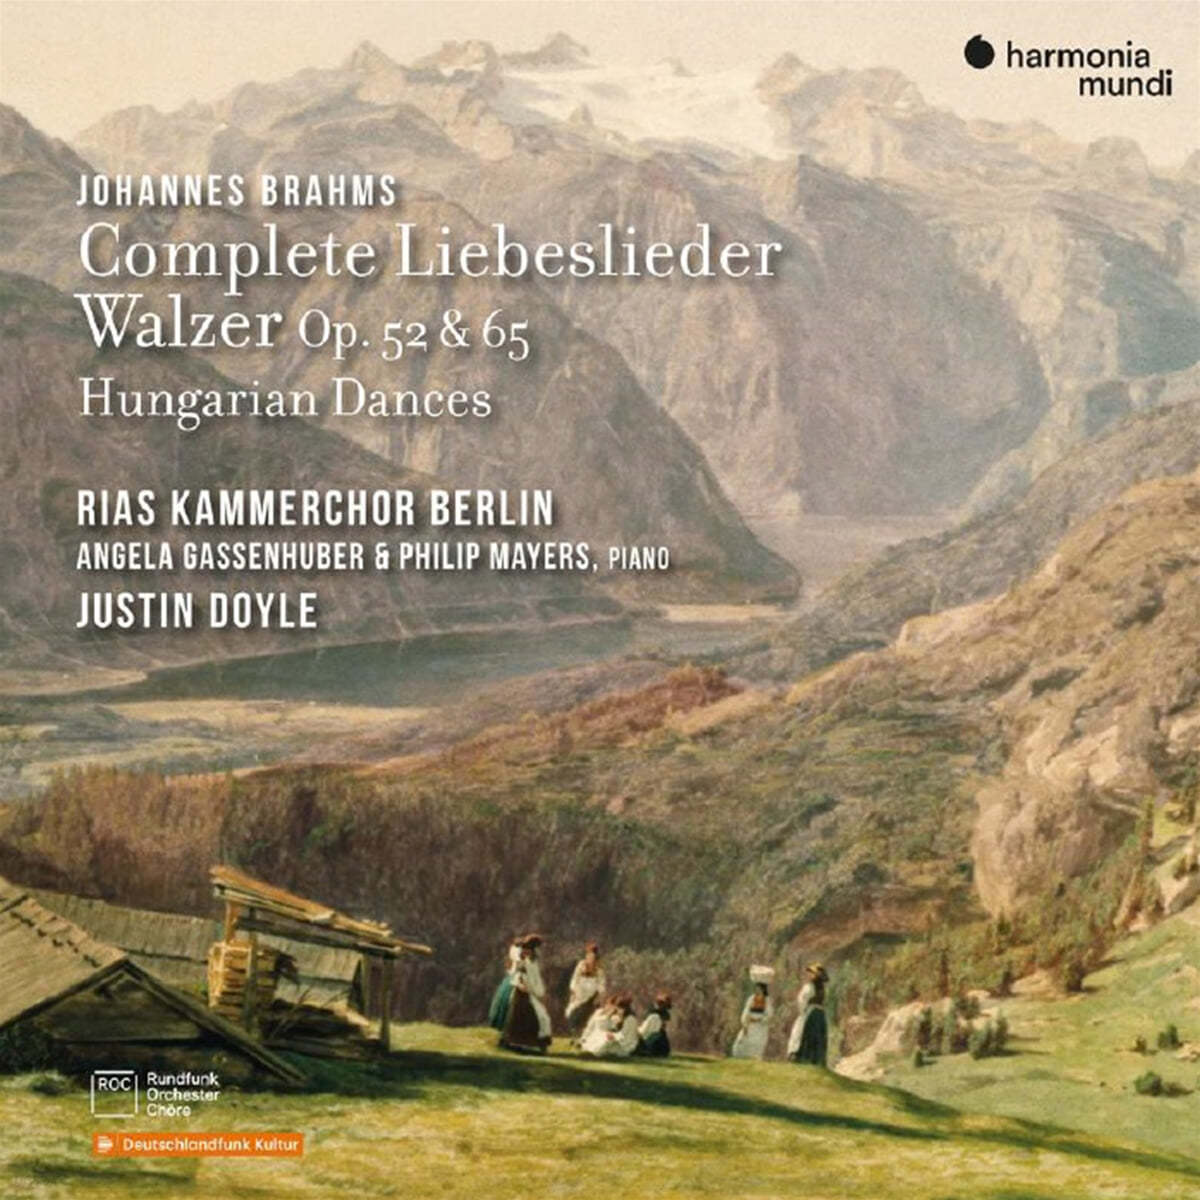 RIAS Kammerchor 브람스: 왈츠에 붙인 사랑의 노래, 새로운 사랑 노래, 헝가리 무곡 (Brahms: Complete Liebeslieder Walzer, Opp. 52 &amp; 65, Hungarian Dances)